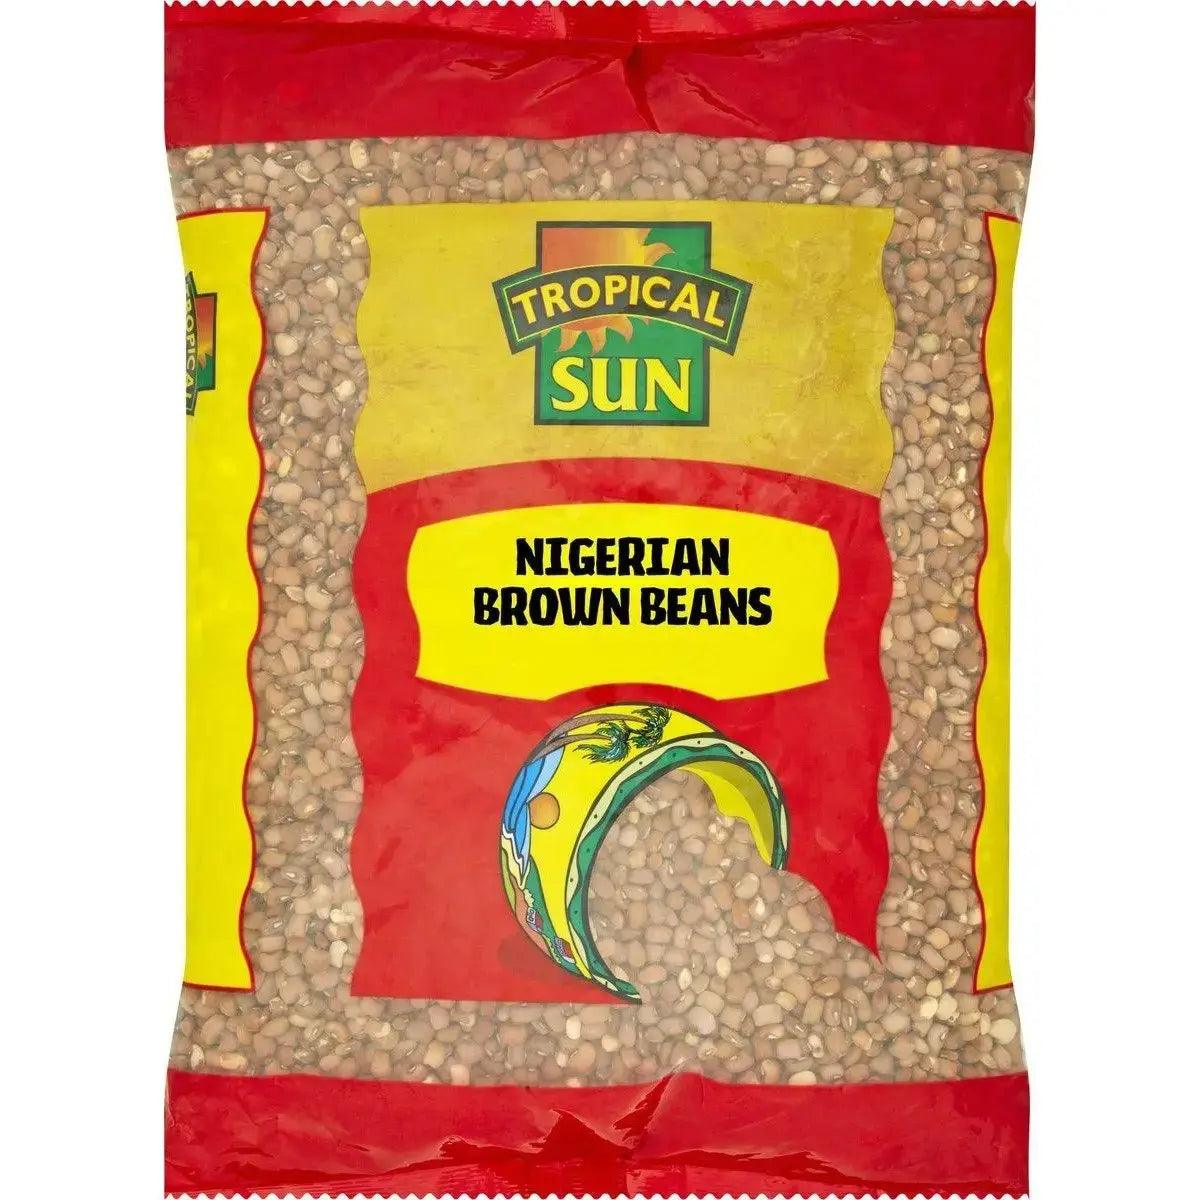 Tropical Sun Nigerian Brown Beans Nigerian dishes - Honesty Sales U.K